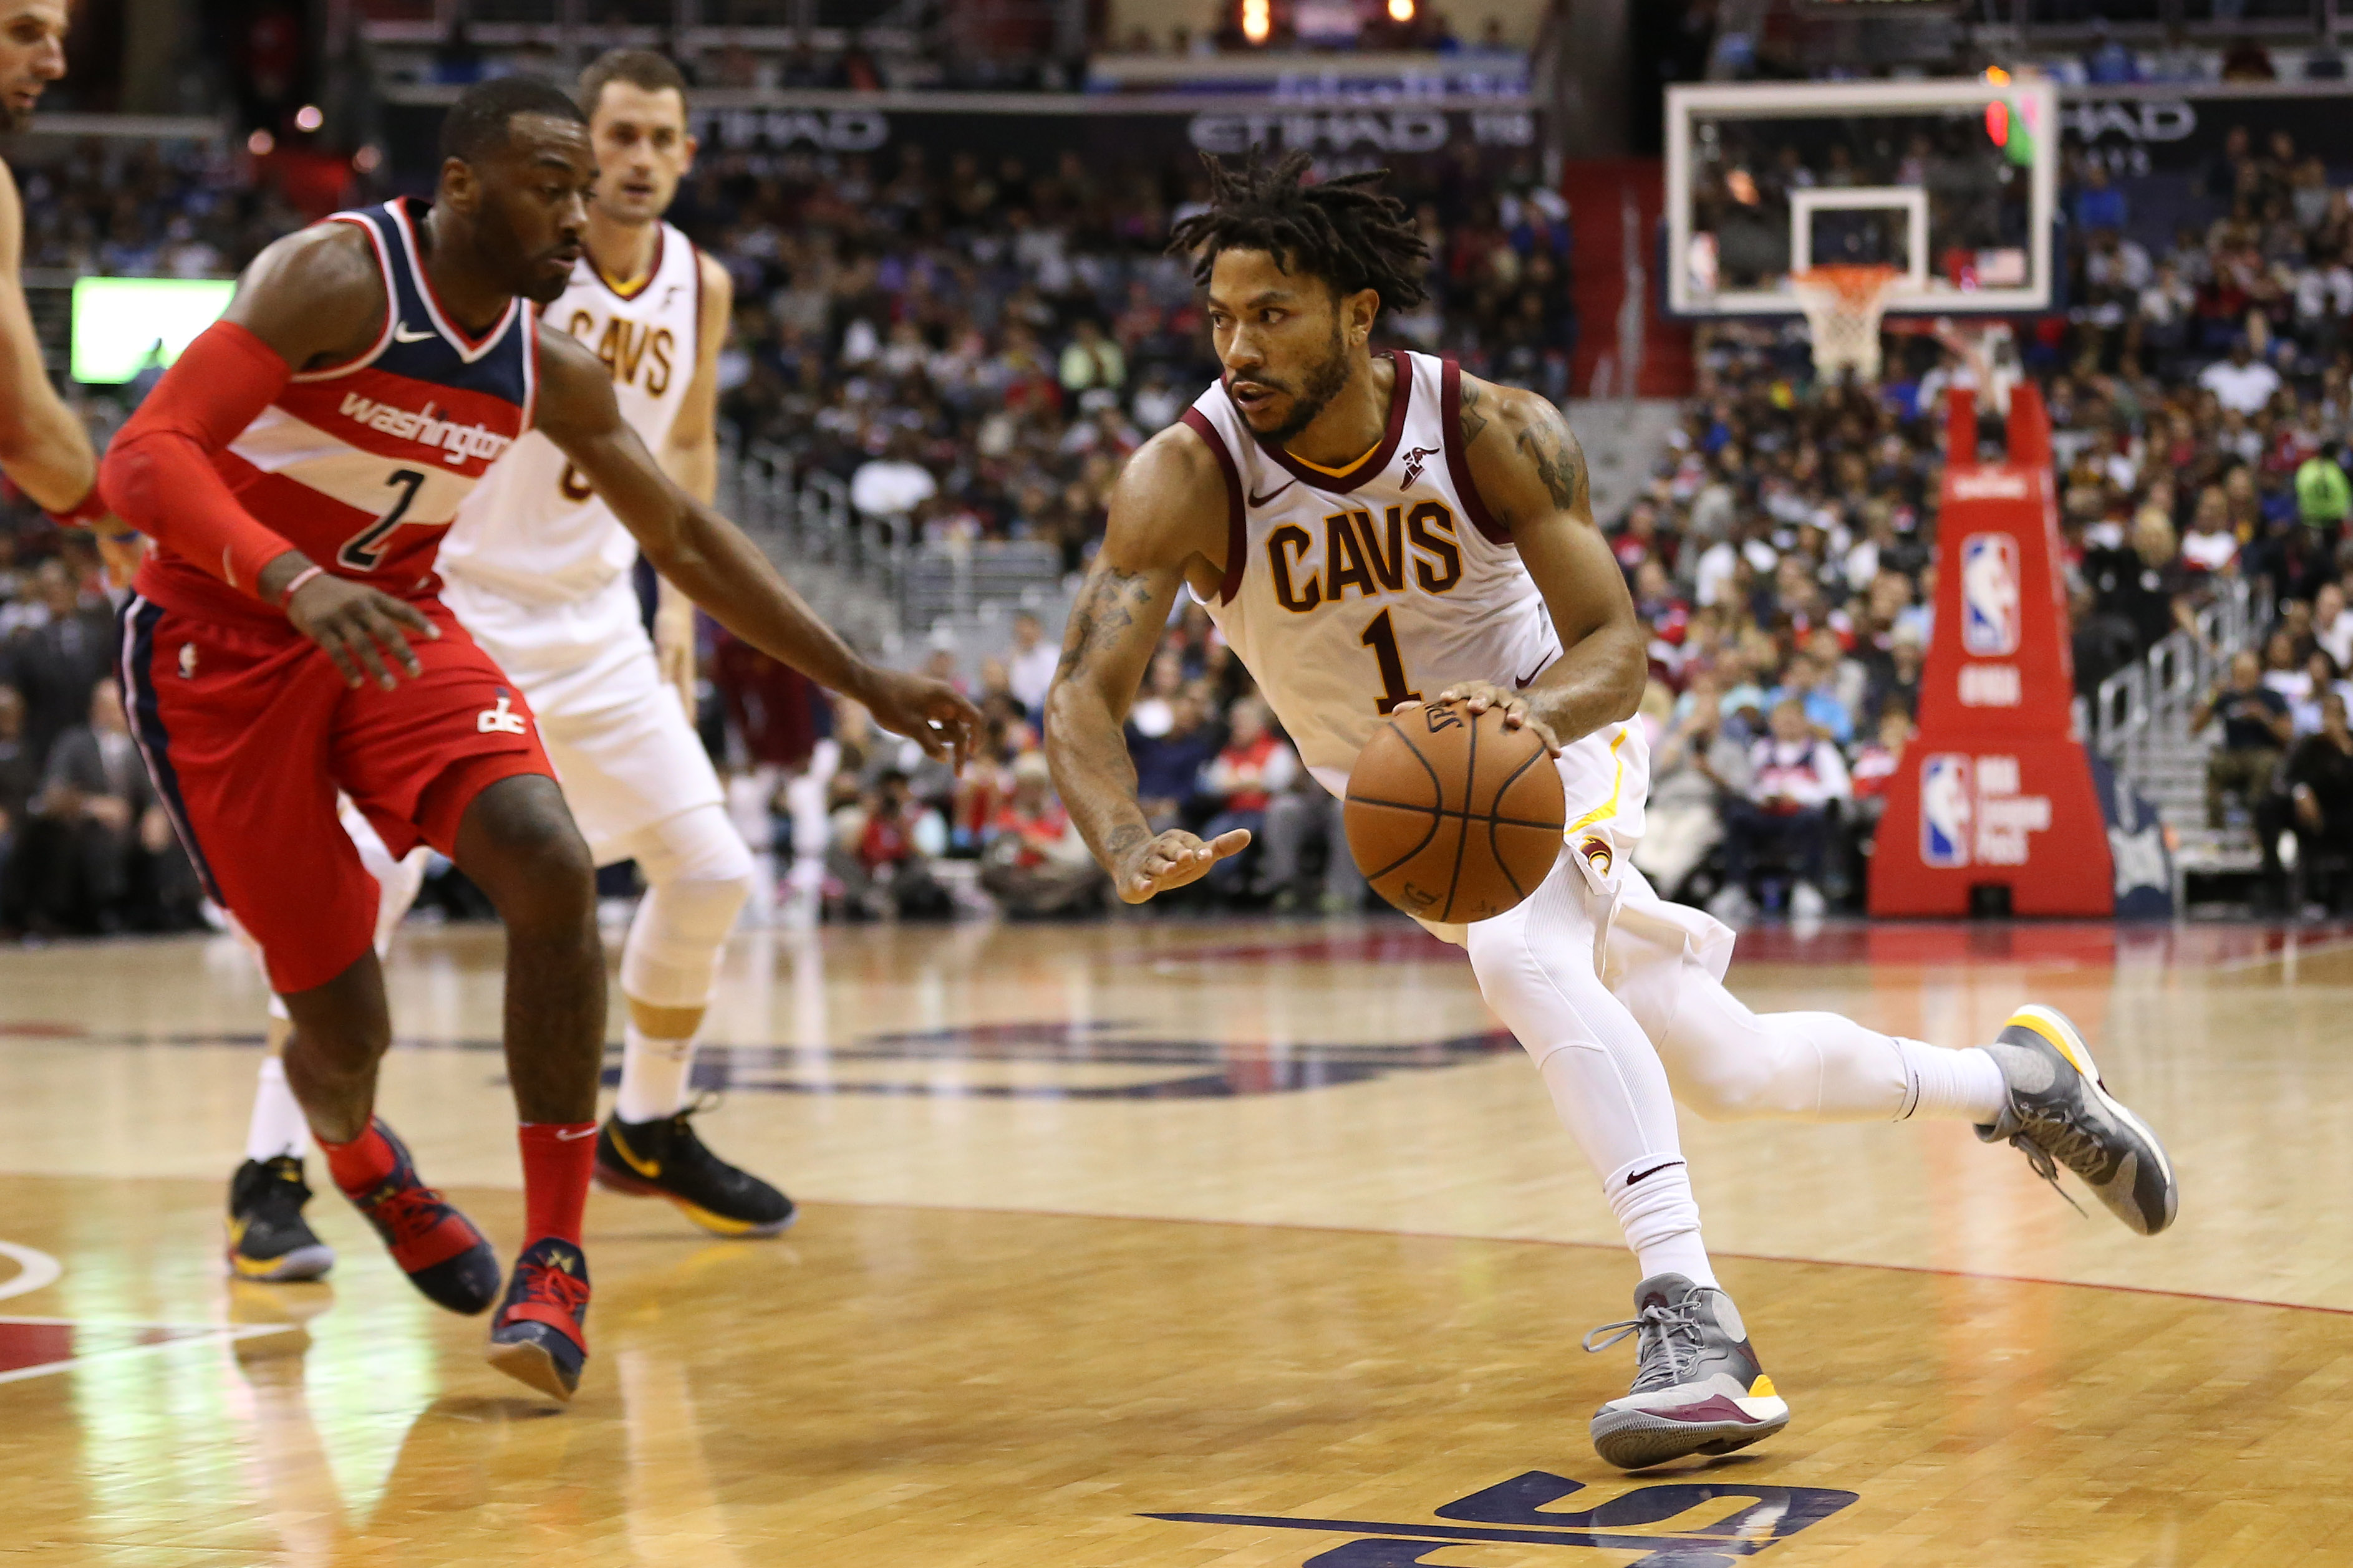 NBA: Cleveland Cavaliers at Washington Wizards